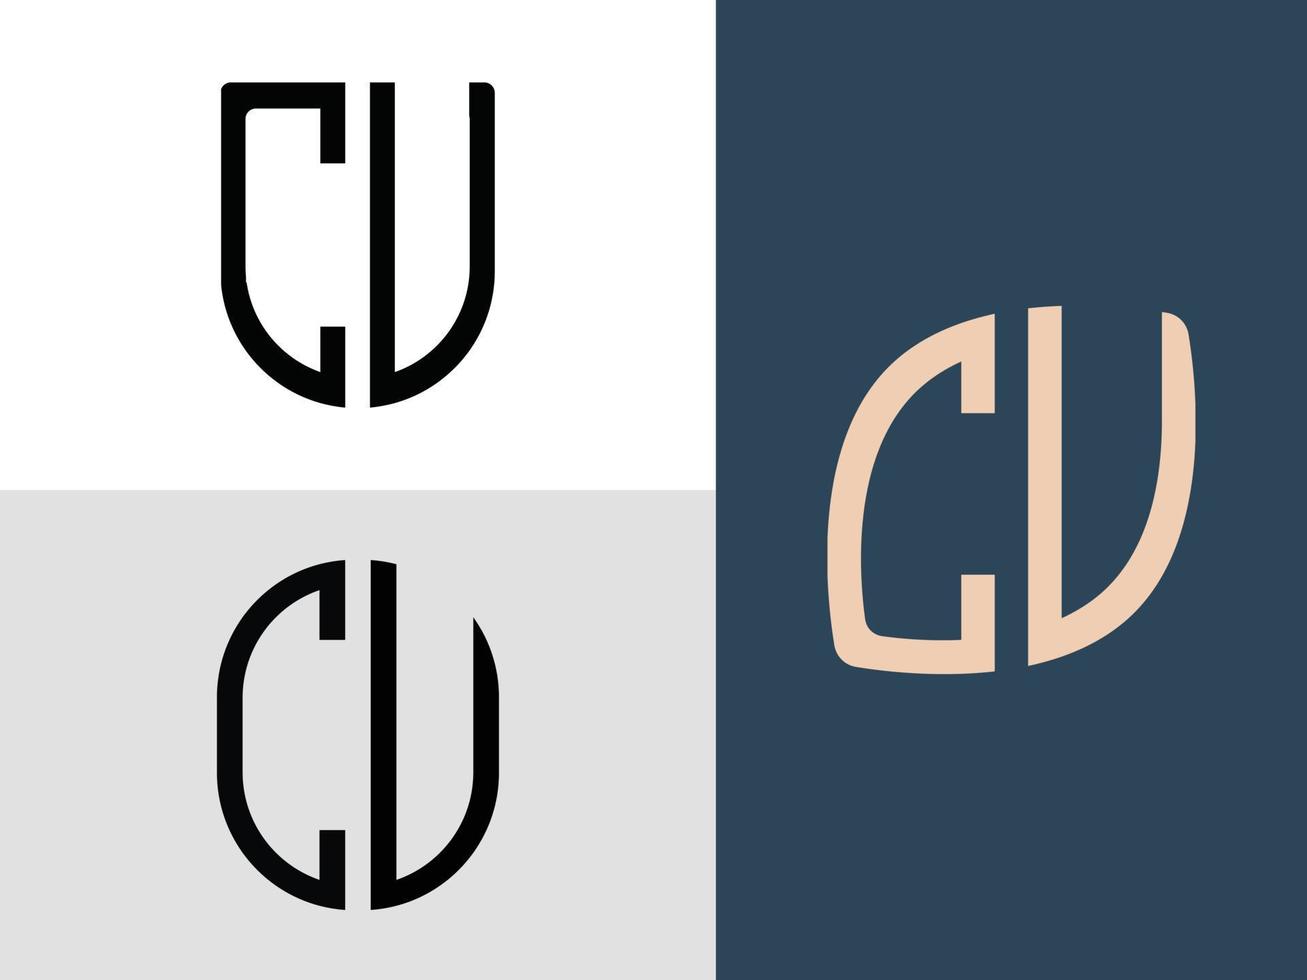 kreative anfangsbuchstaben cu logo designs paket. vektor